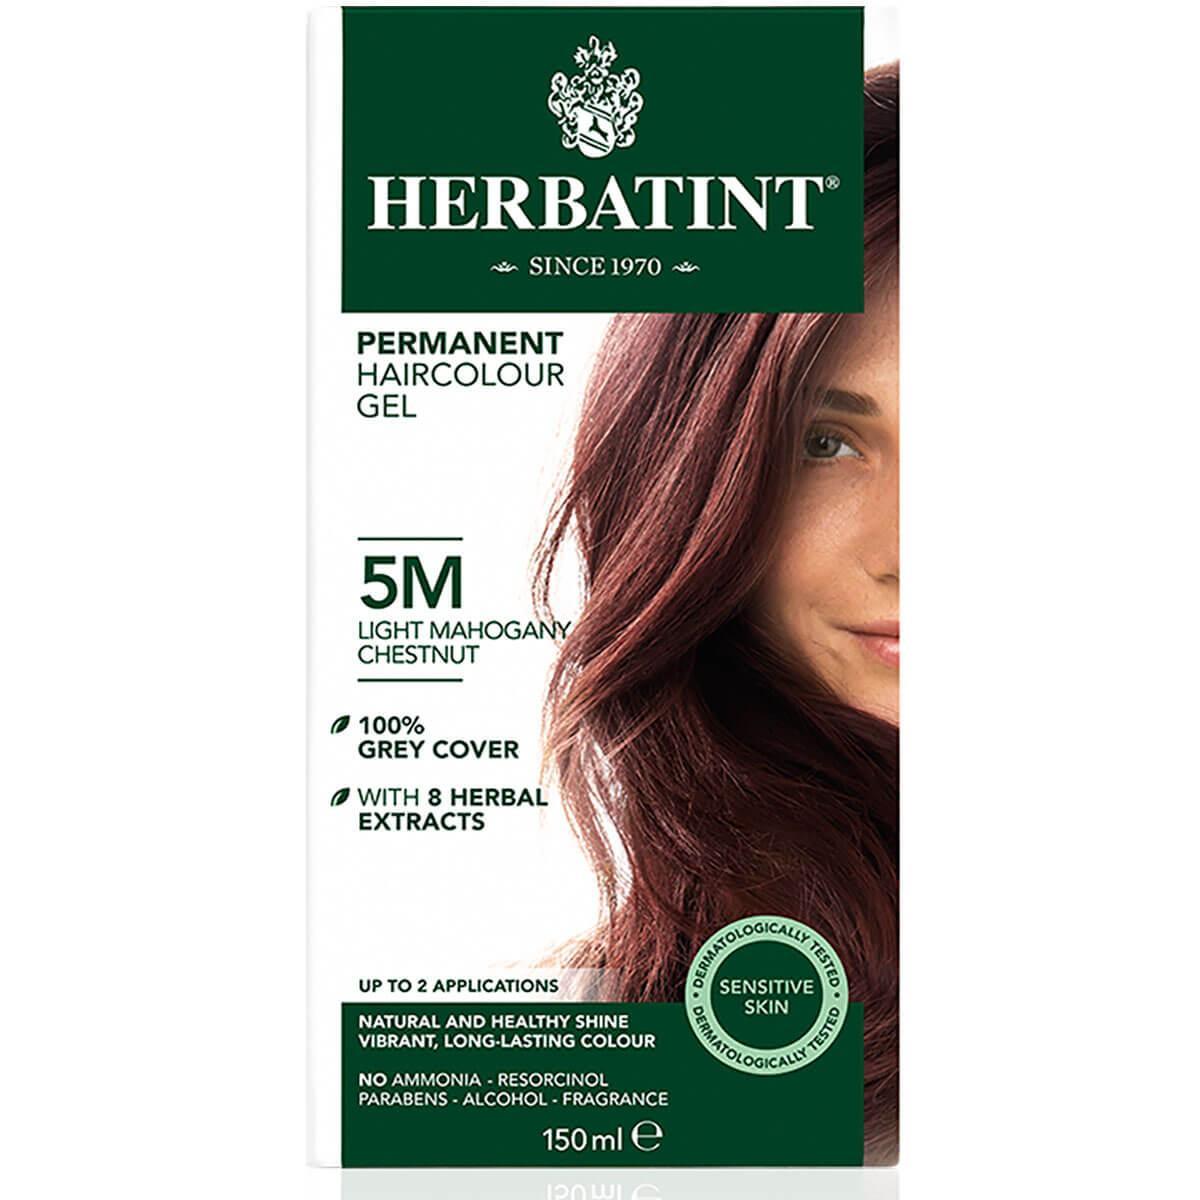 Chestnut, Light Mahogany (5M) - Herbatint Permanent Hair Colour Gel